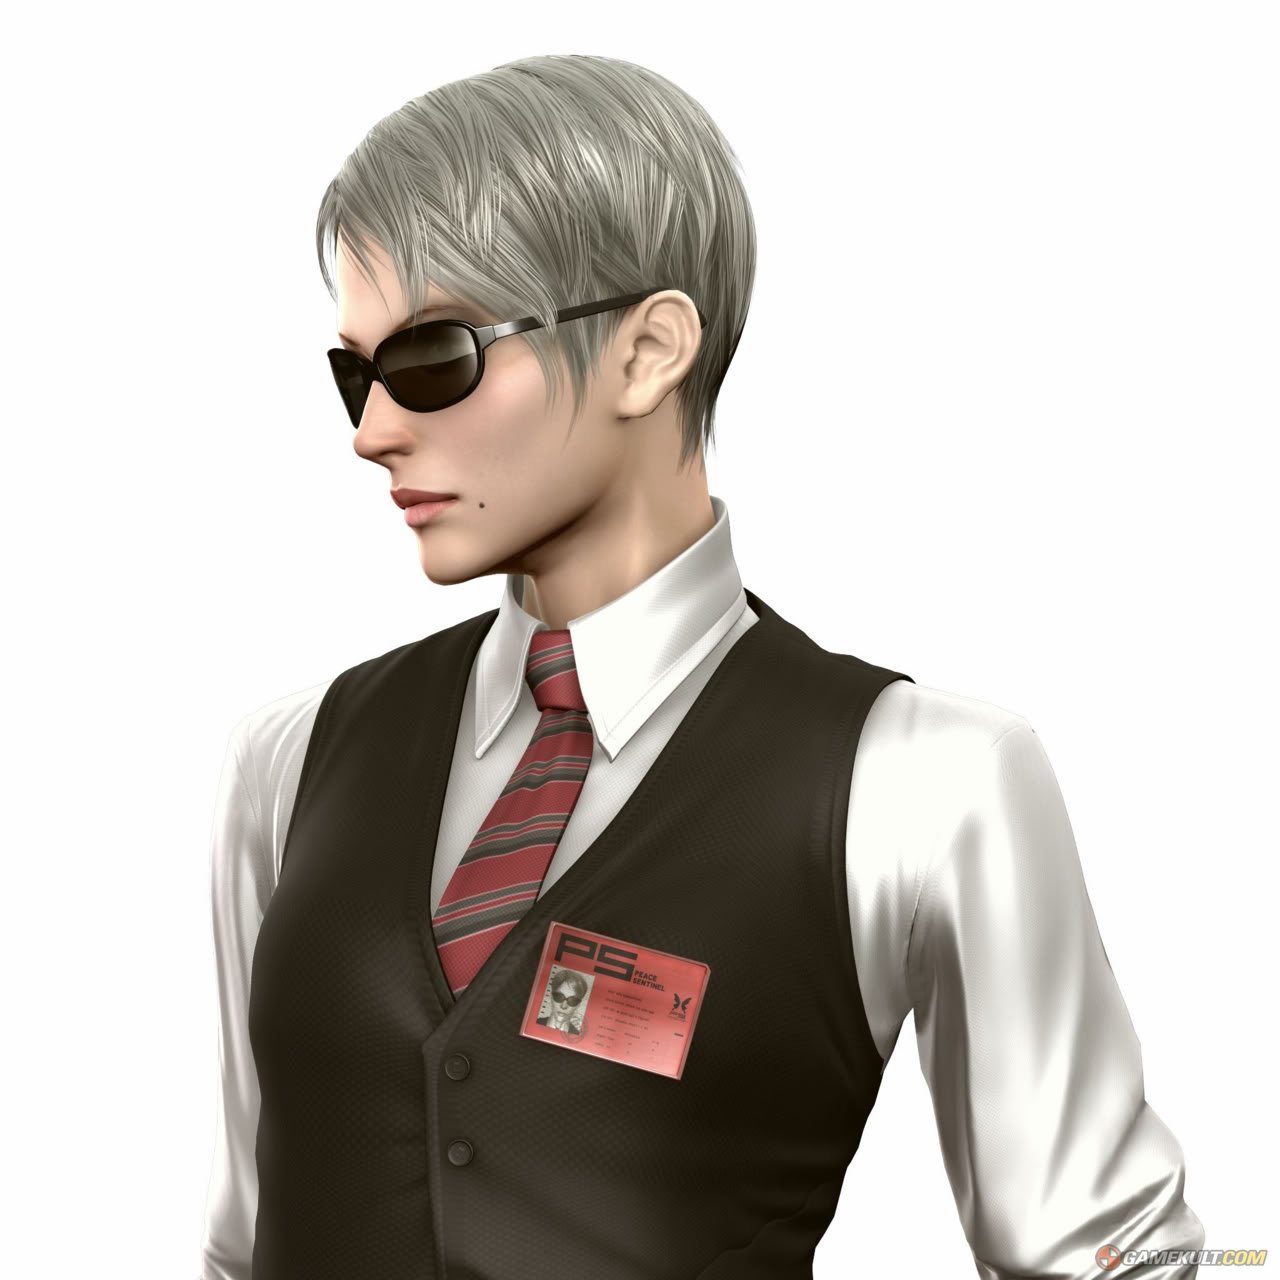 Video Game Fashion on Twitter: "Dr. Strangelove / Suit vest, sunglasse...